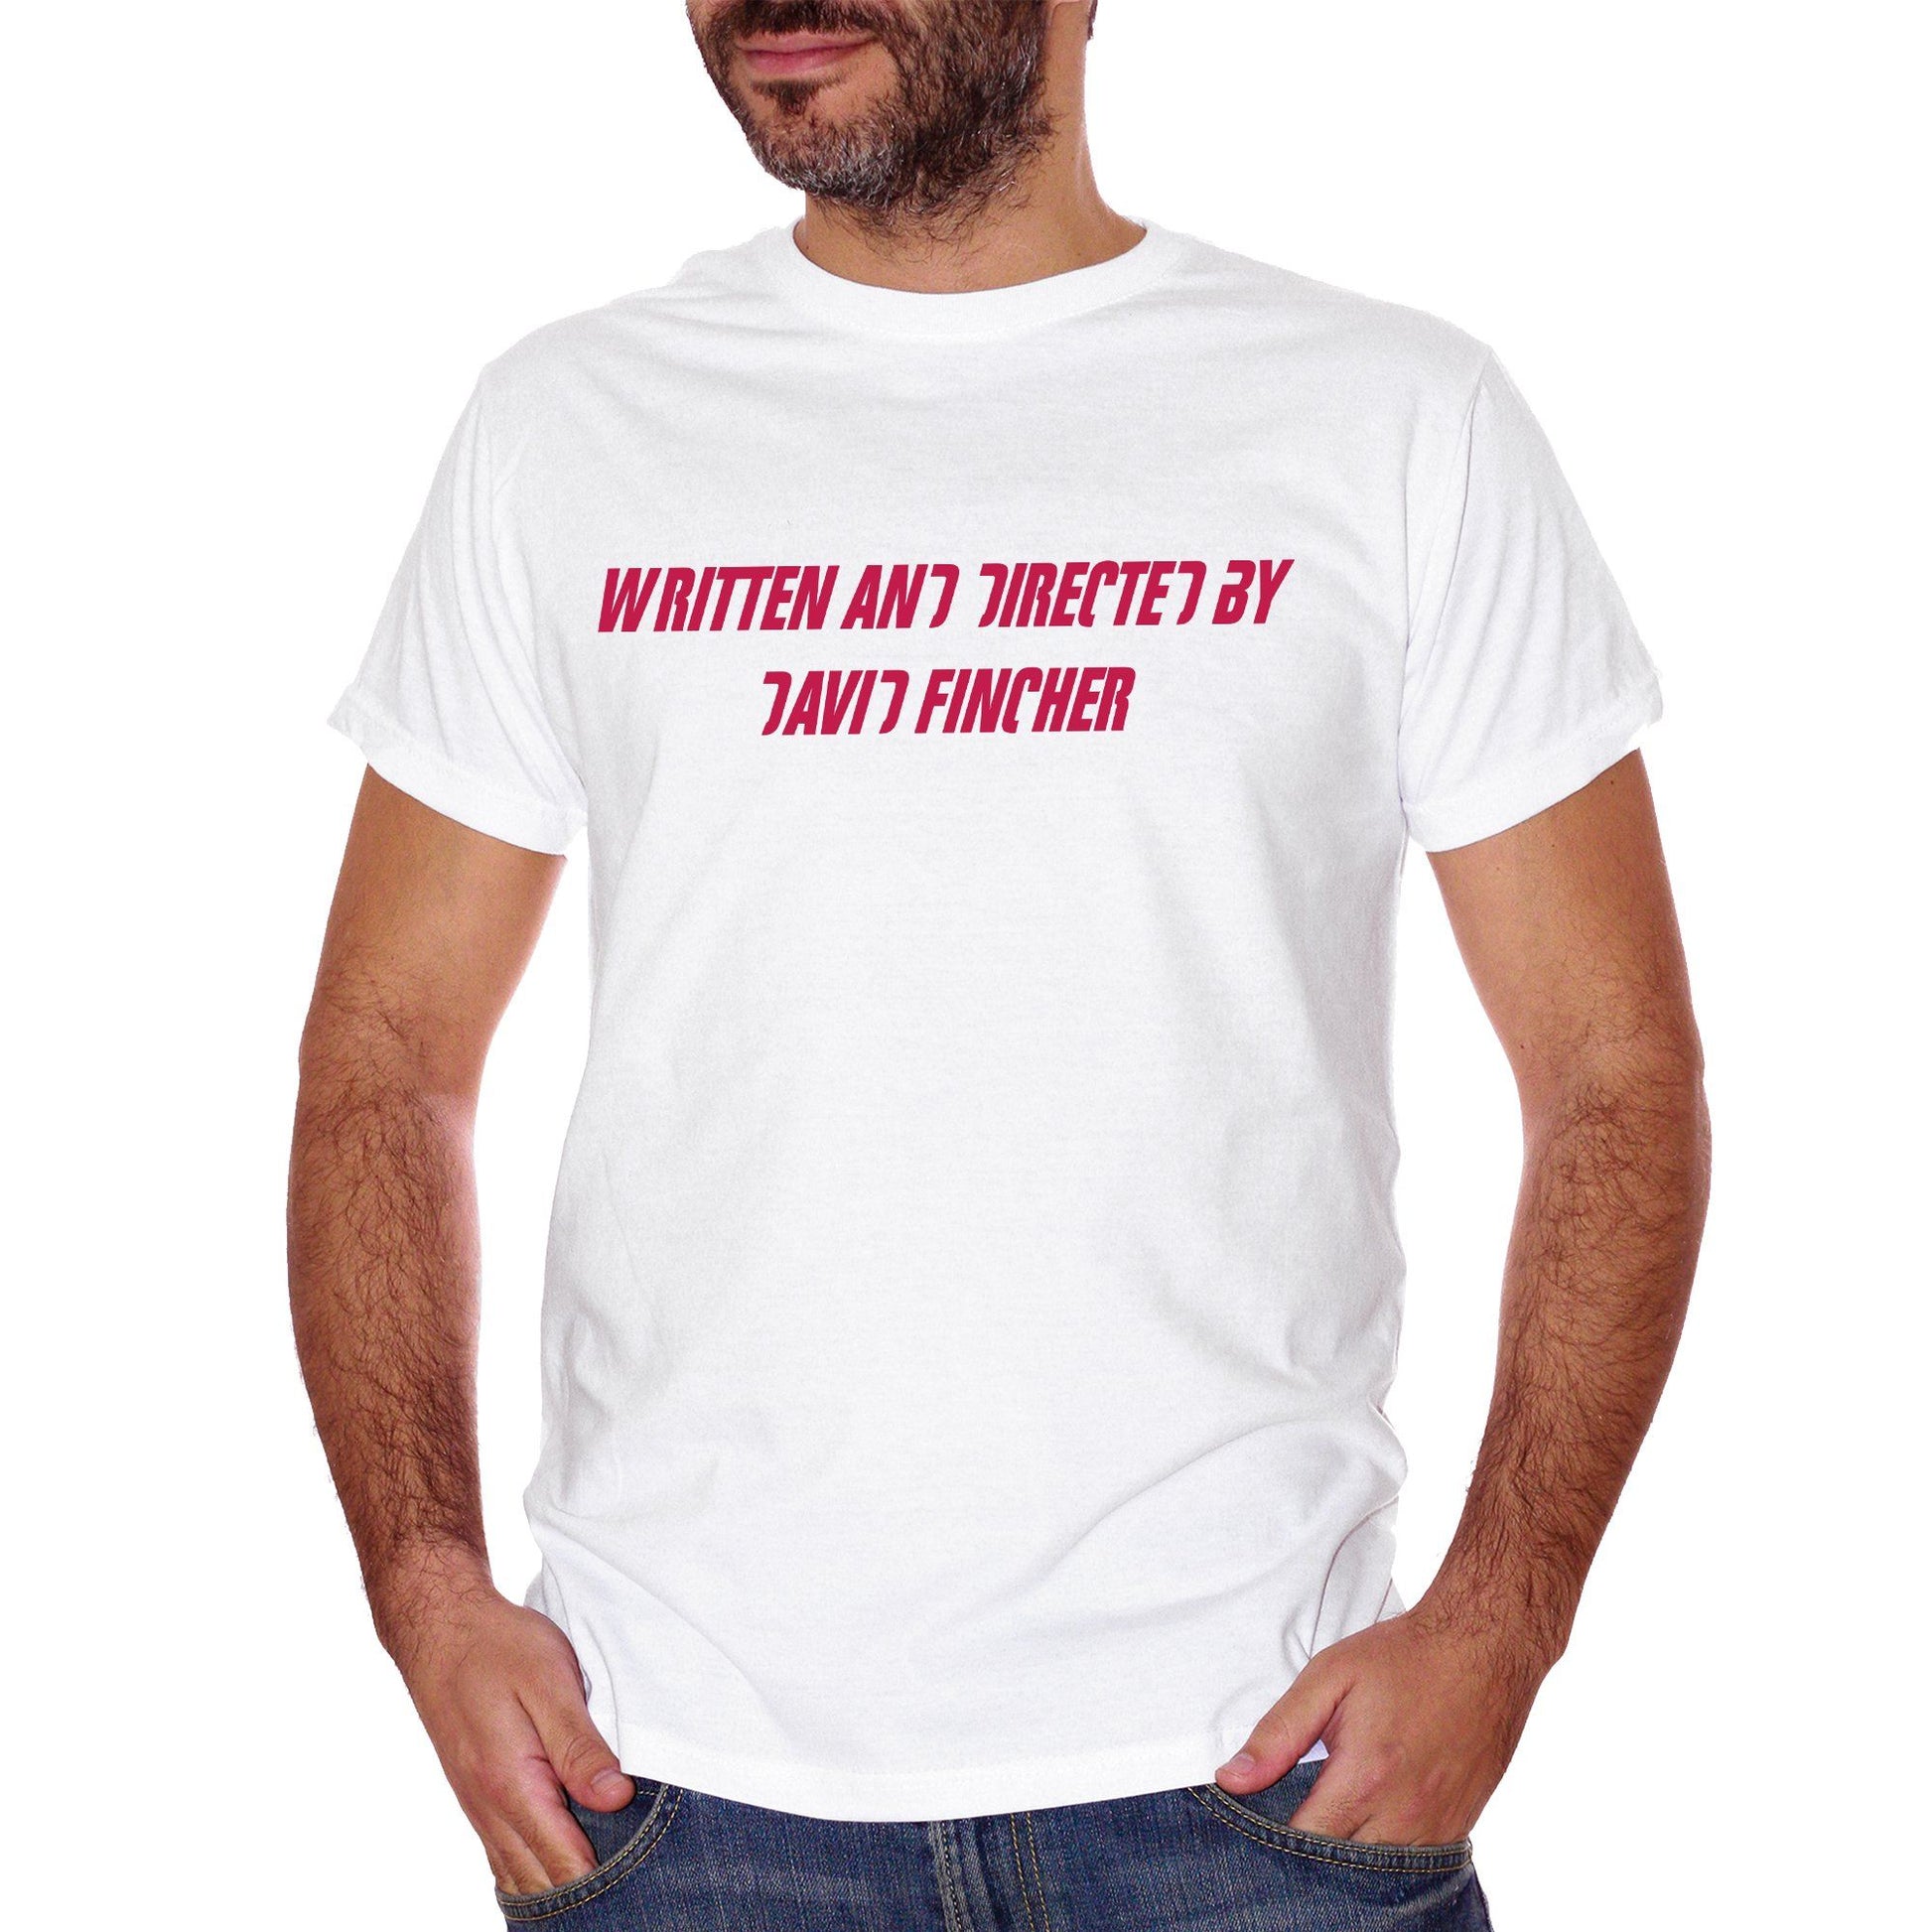 White Smoke T-Shirt Written And Directed By David Fincher Titoli di coda - Movie Choose ur color CucShop